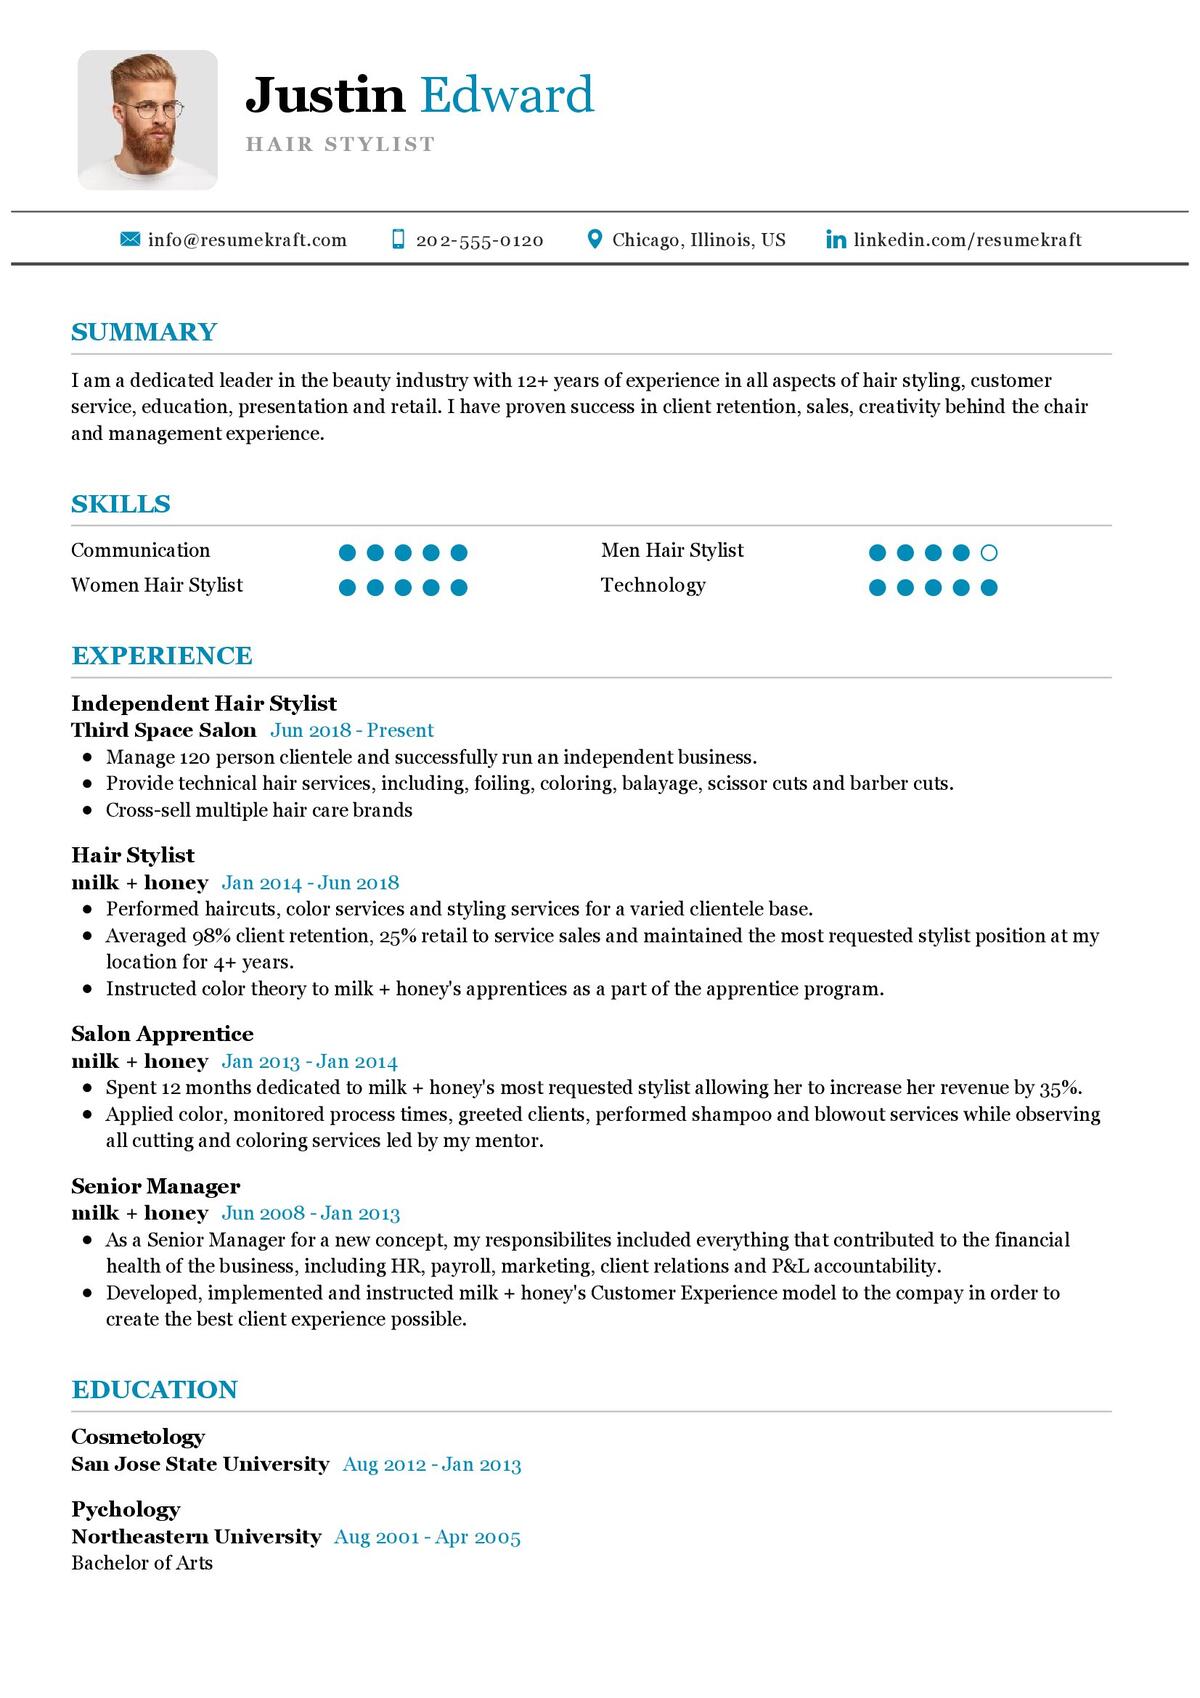 Hair Stylist CV Sample 2023 | Writing Tips - ResumeKraft